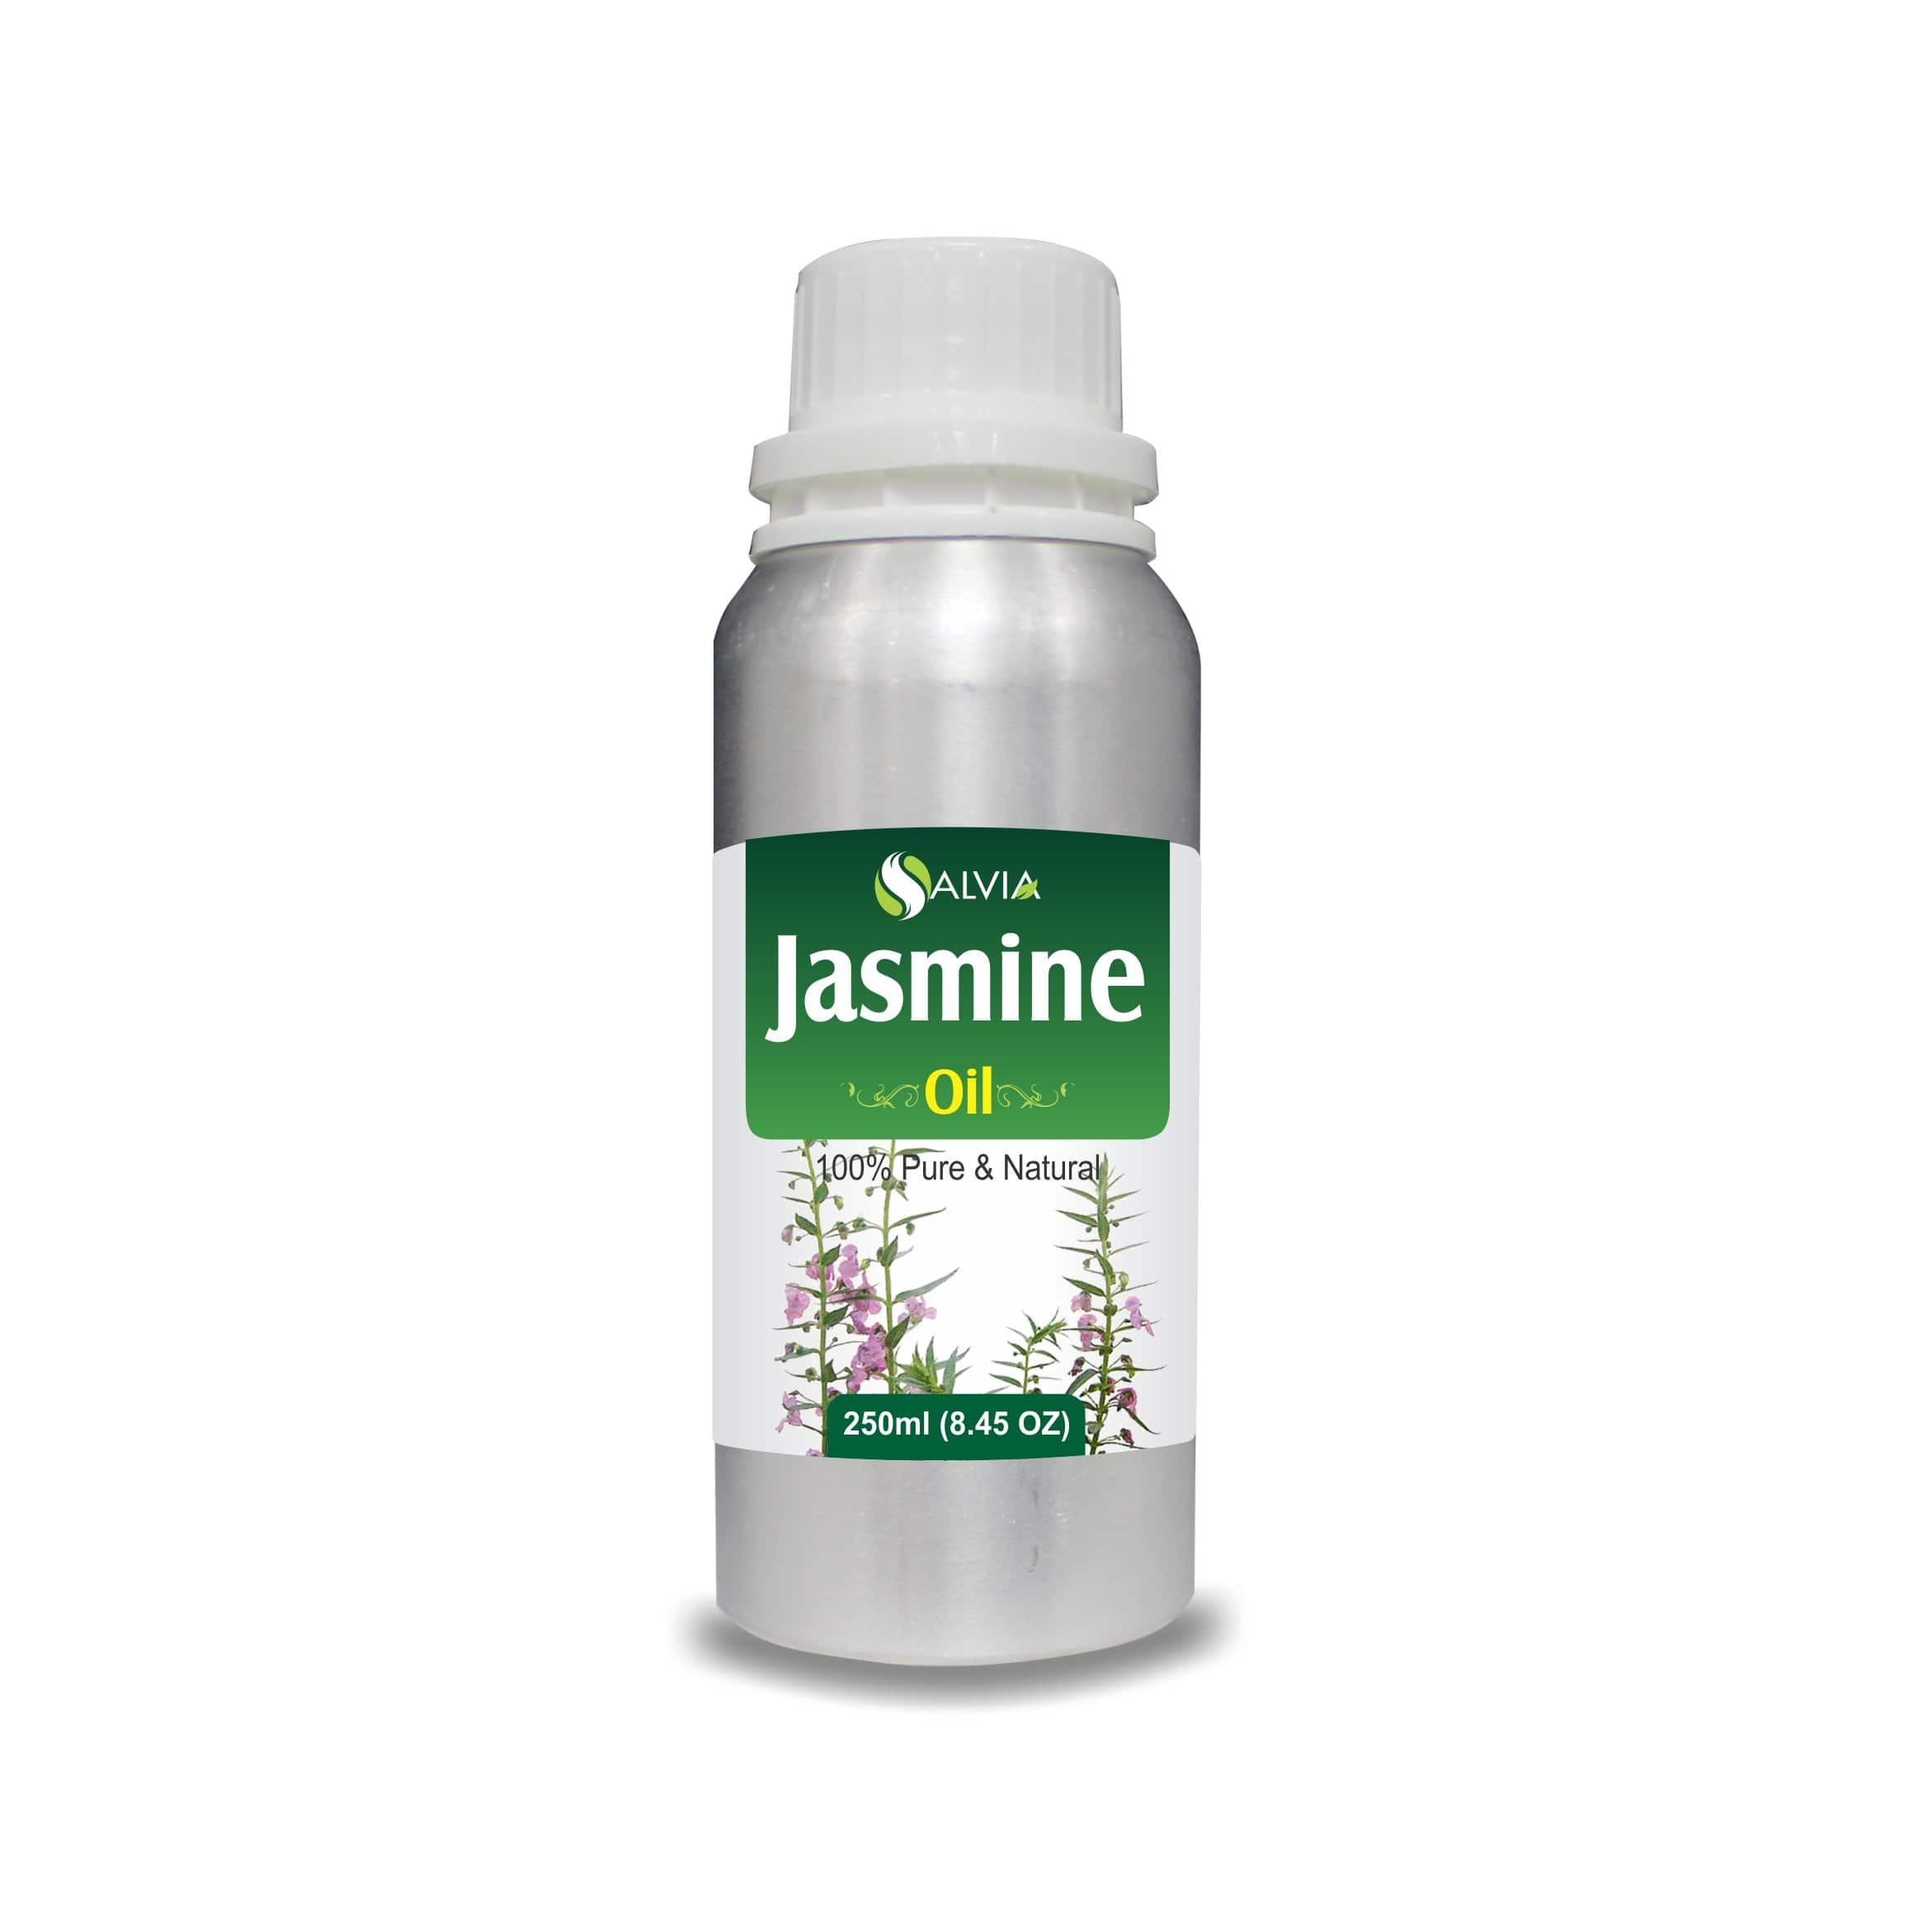 jasmine essential oil benefits